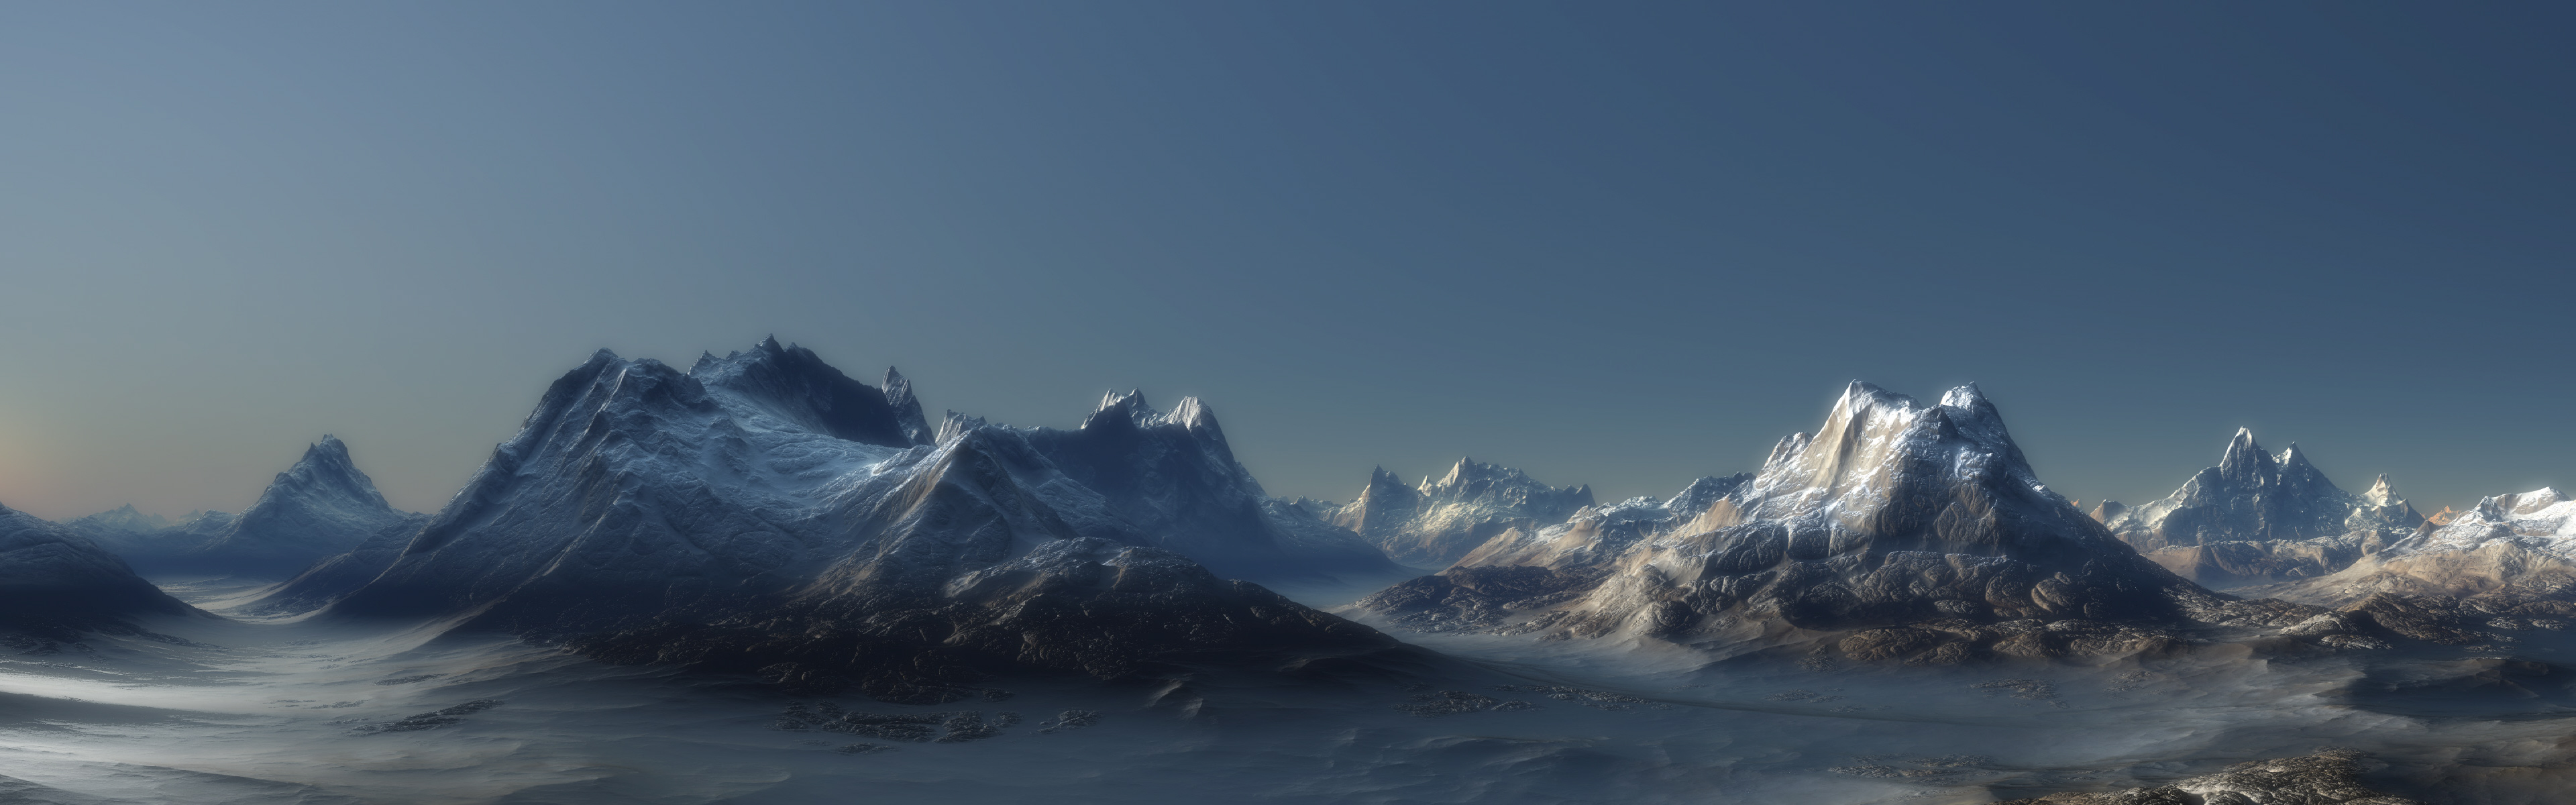 mountains, landscapes, panorama - desktop wallpaper